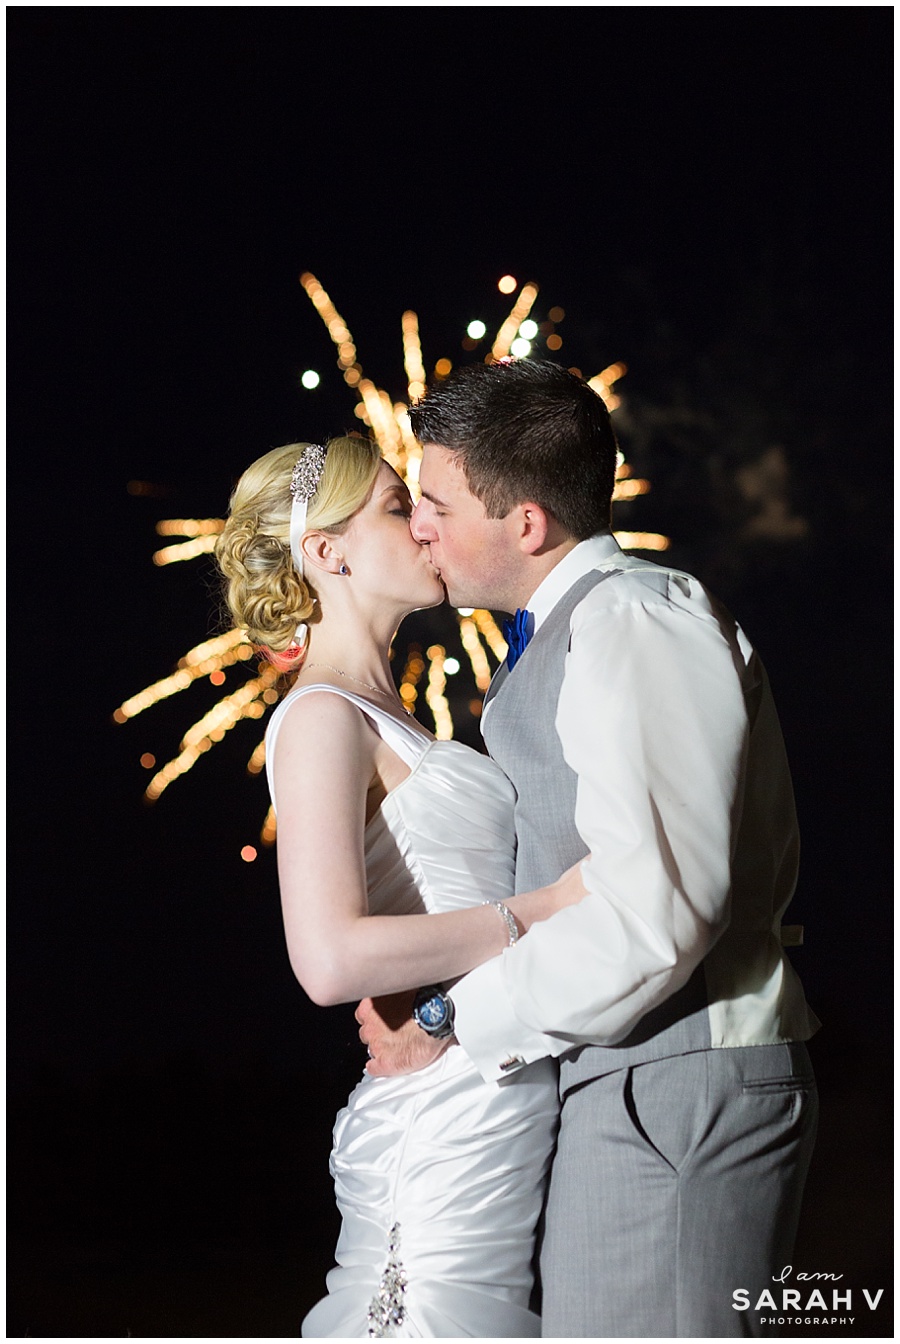 Dover NH Wedding Photography fireworks // I AM SARAH V Photography